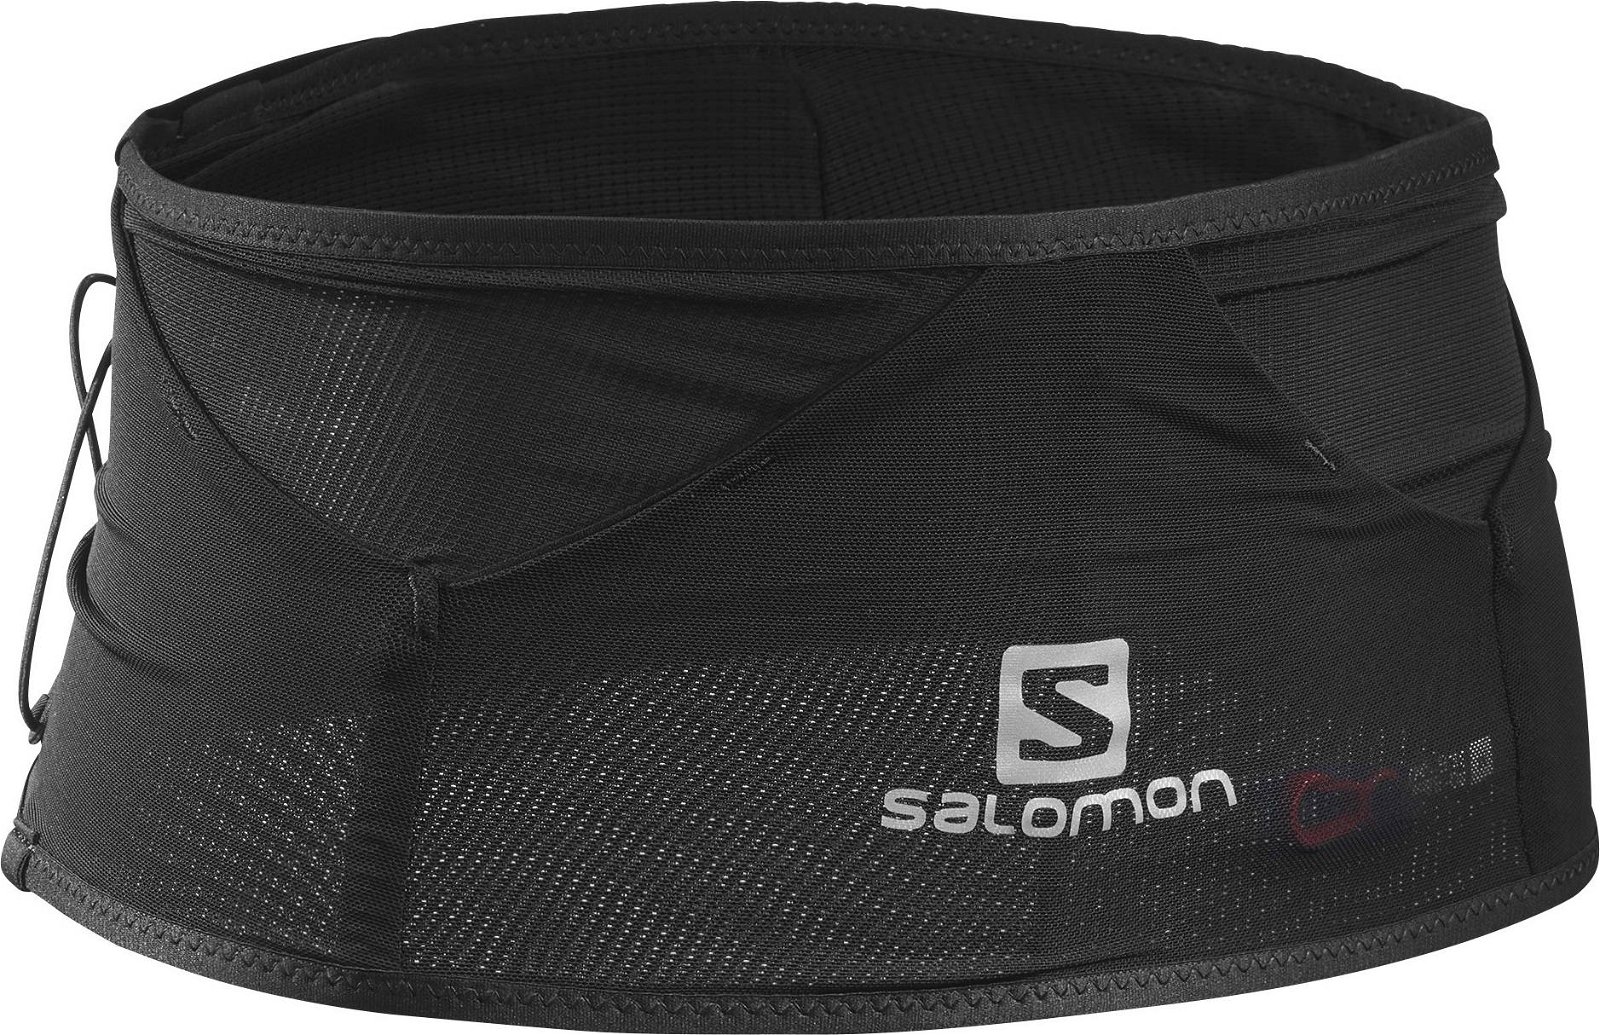 Salomon ADV Skin Belt